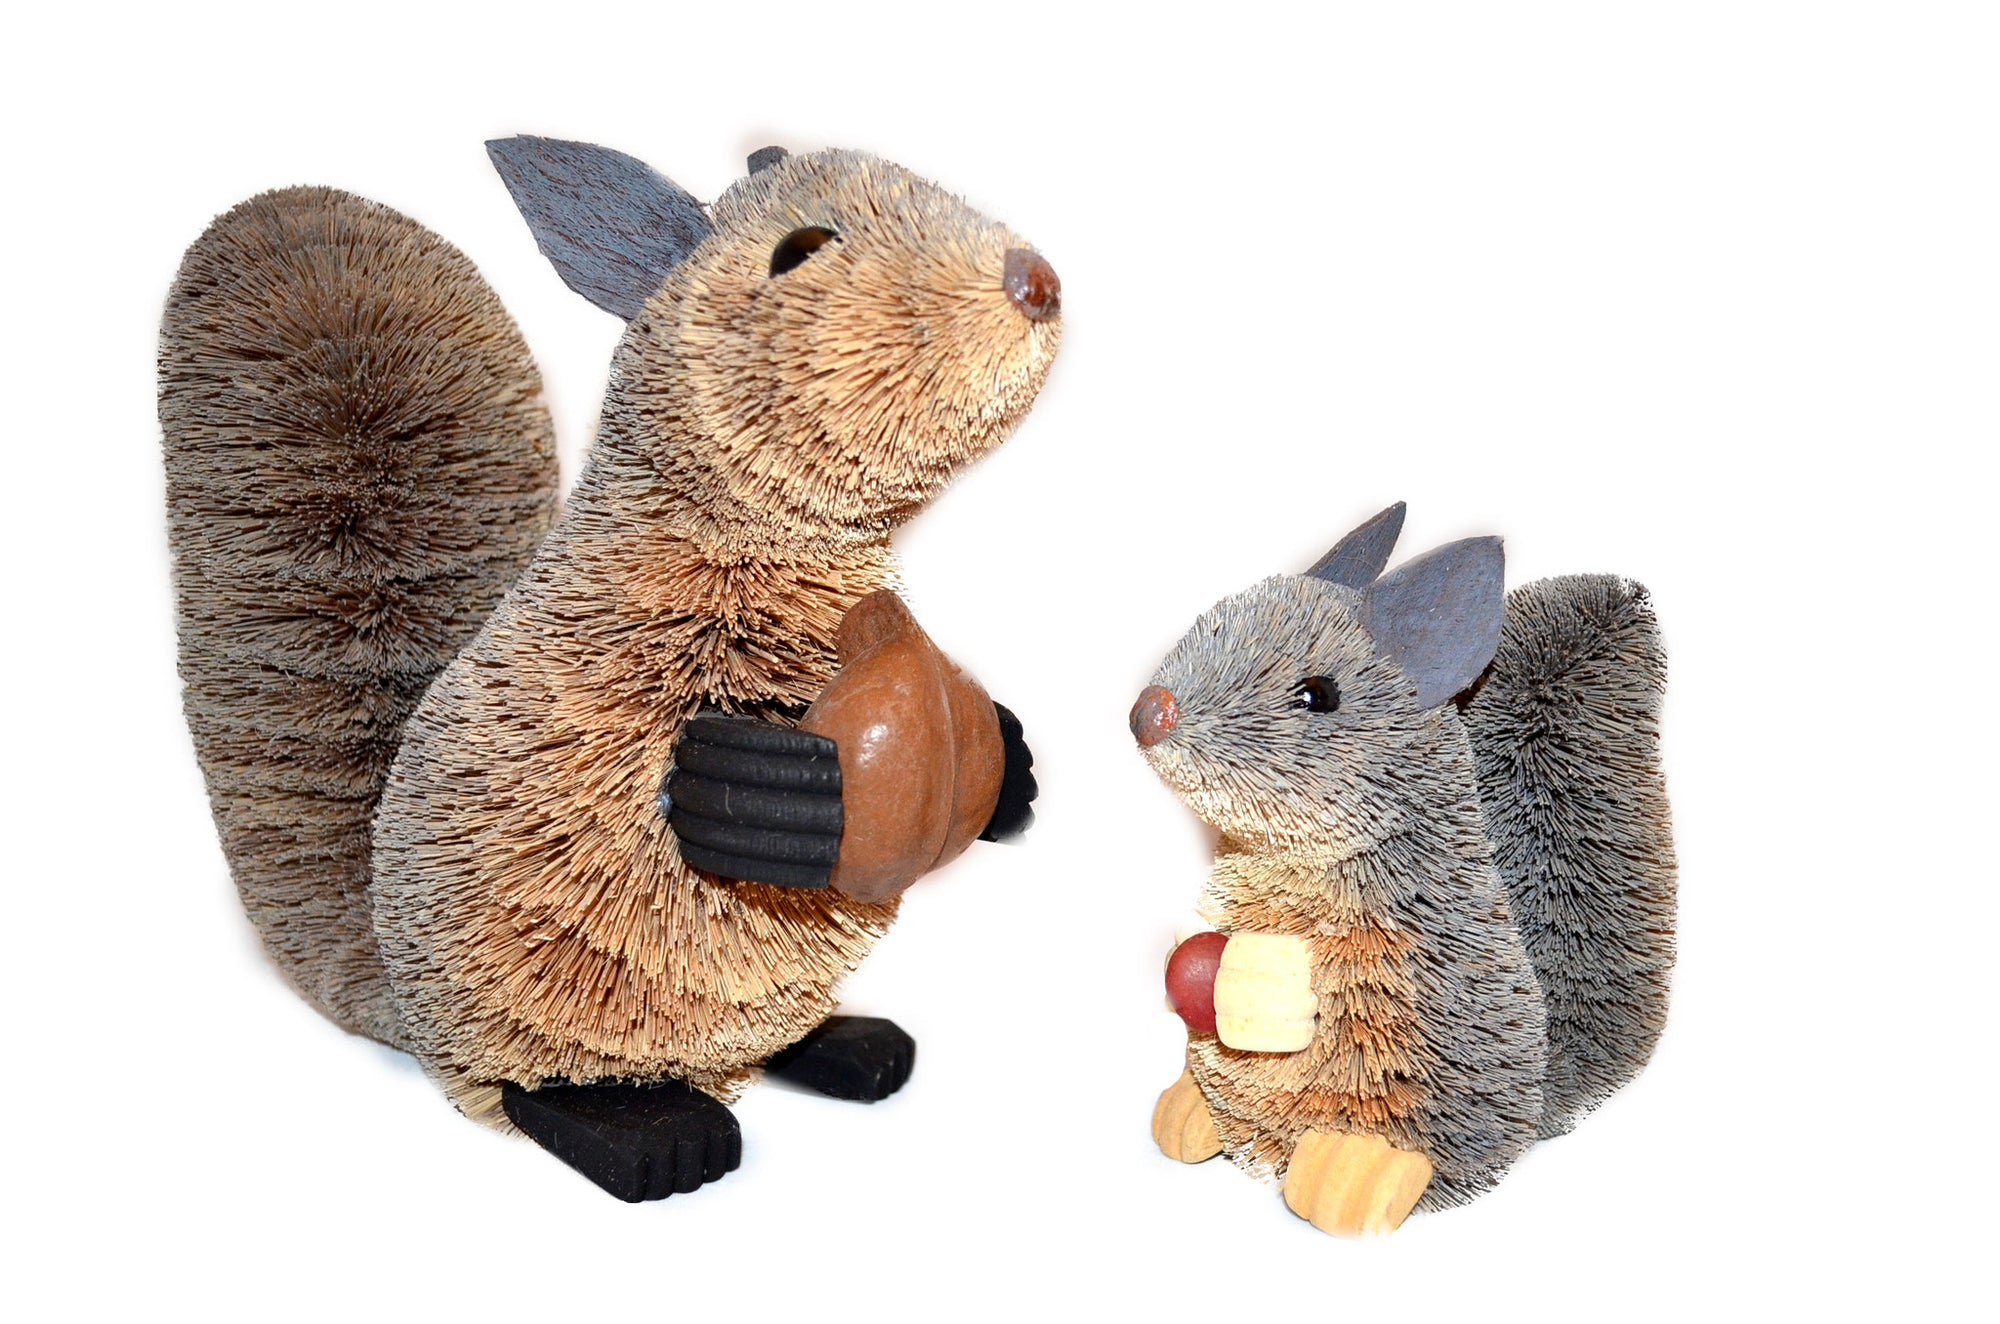 Brushkin Squirrel Statues - Squirrels and More